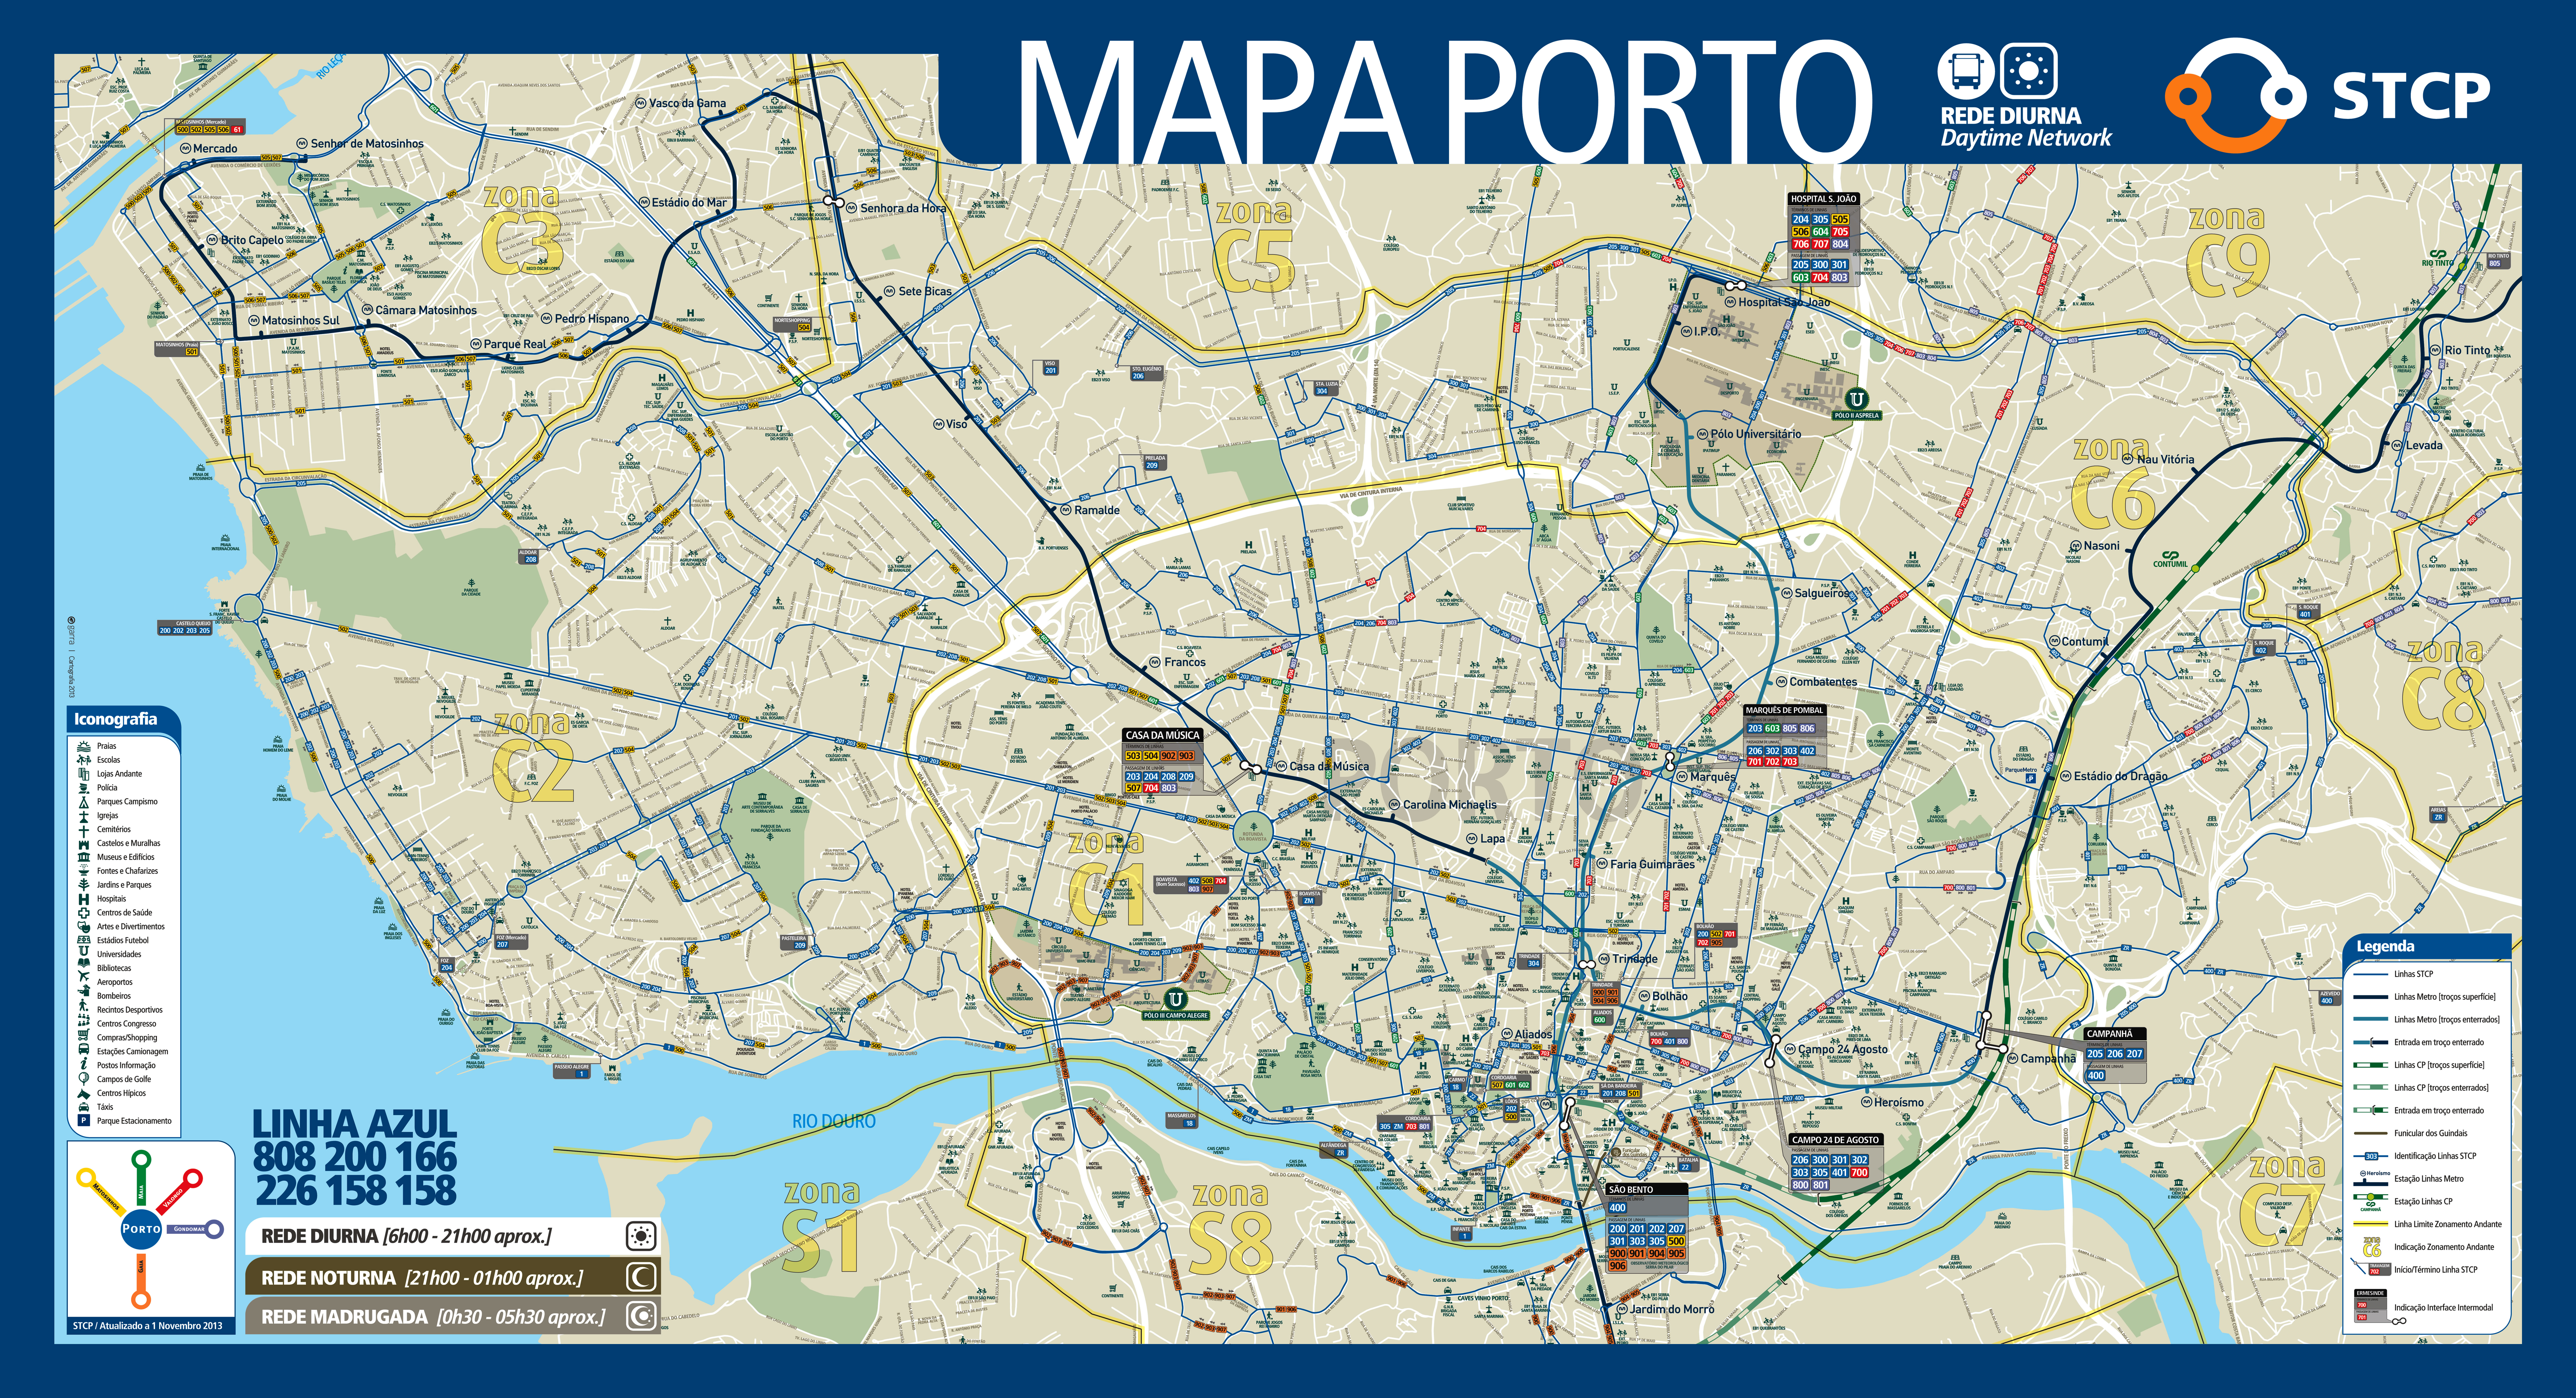 Large scale tourist map of Porto city | Porto | Portugal | Europe